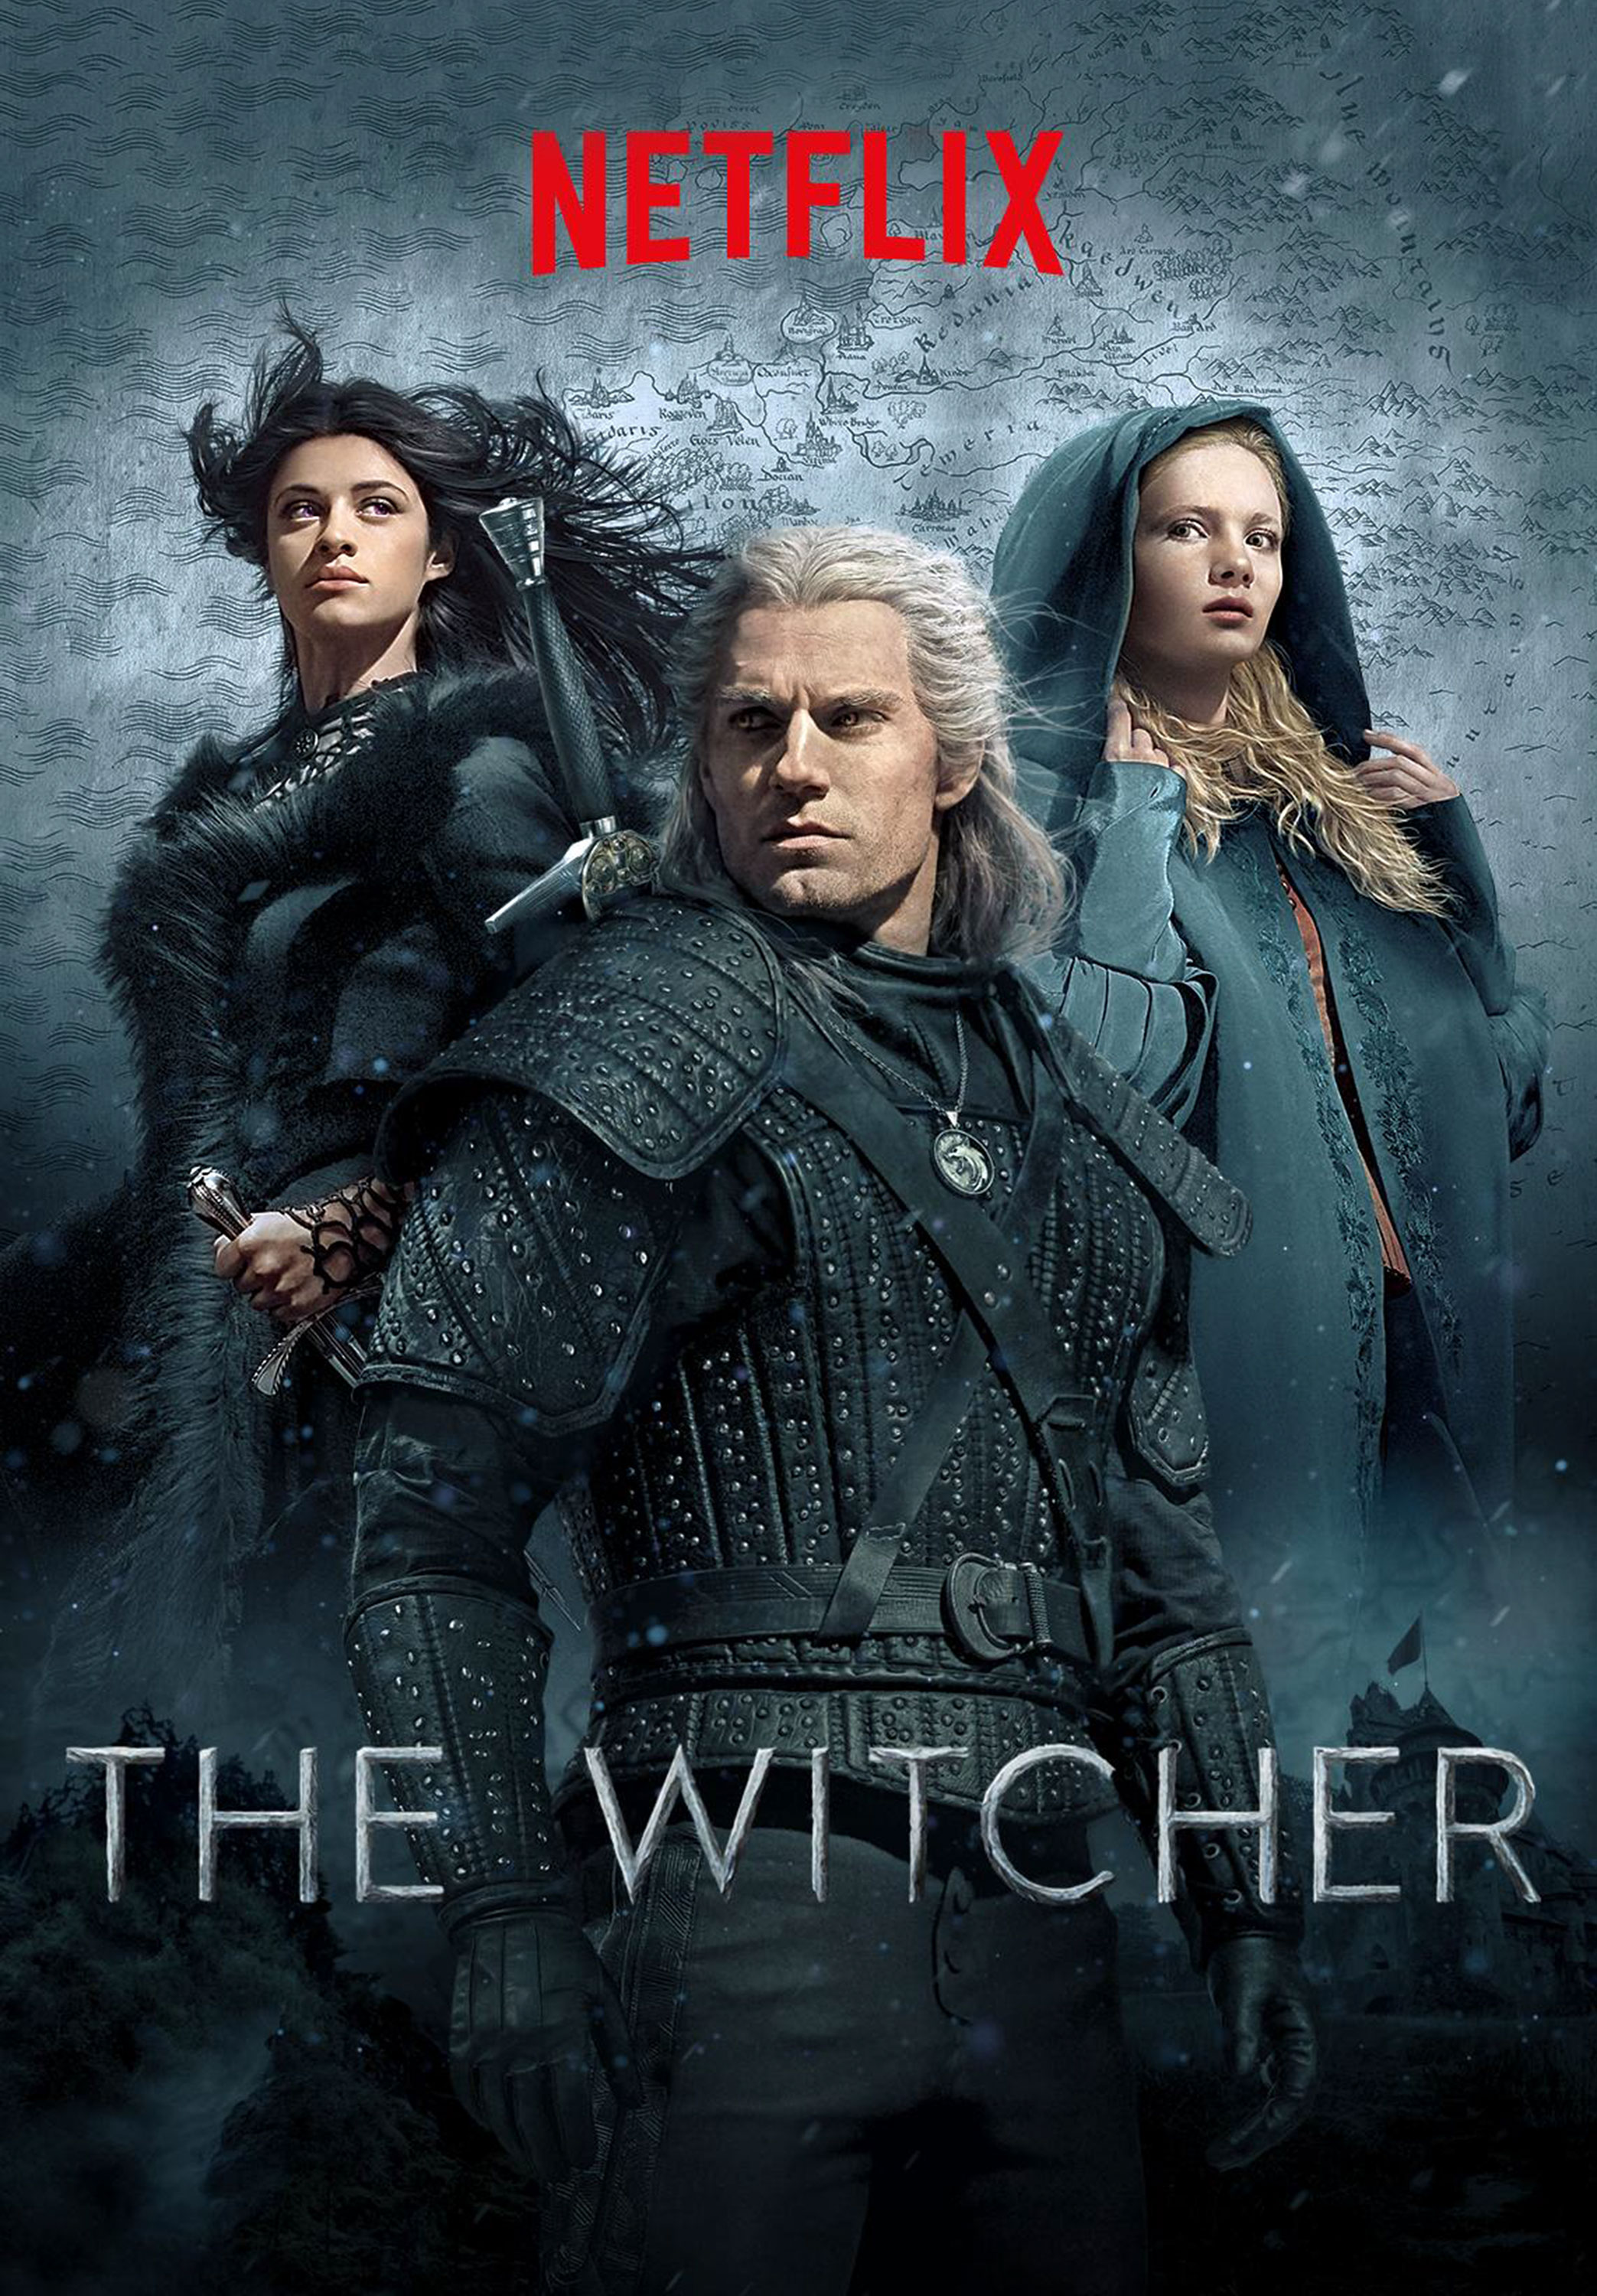 The Witcher Cast on Netflix